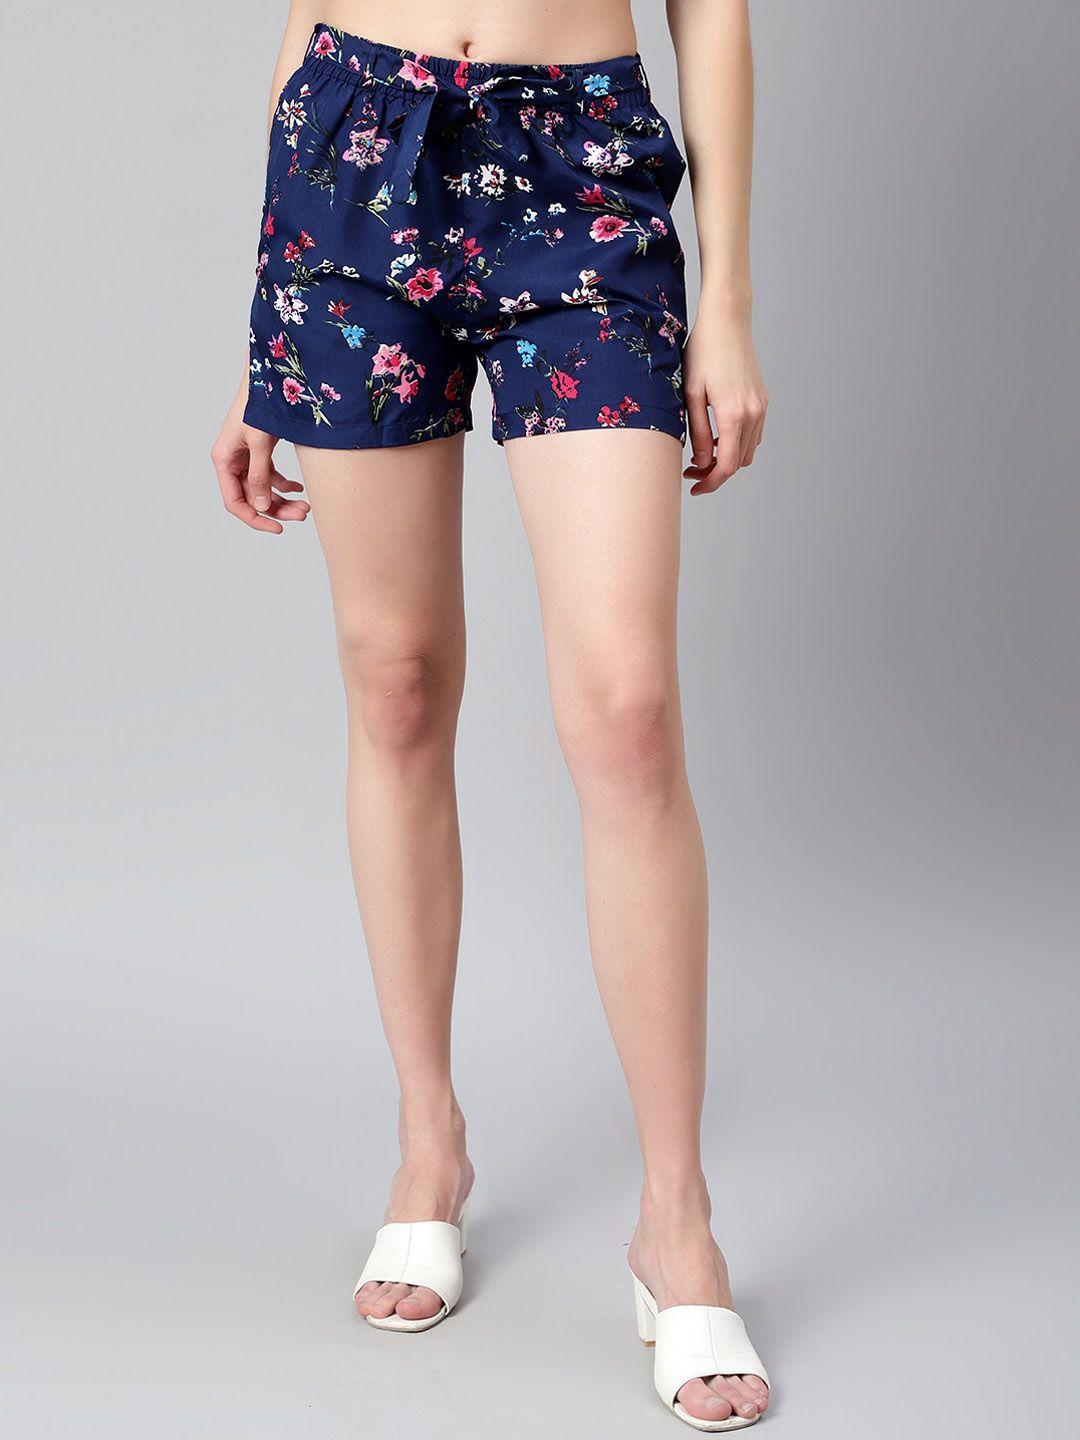 kushi flyer women floral printed shorts